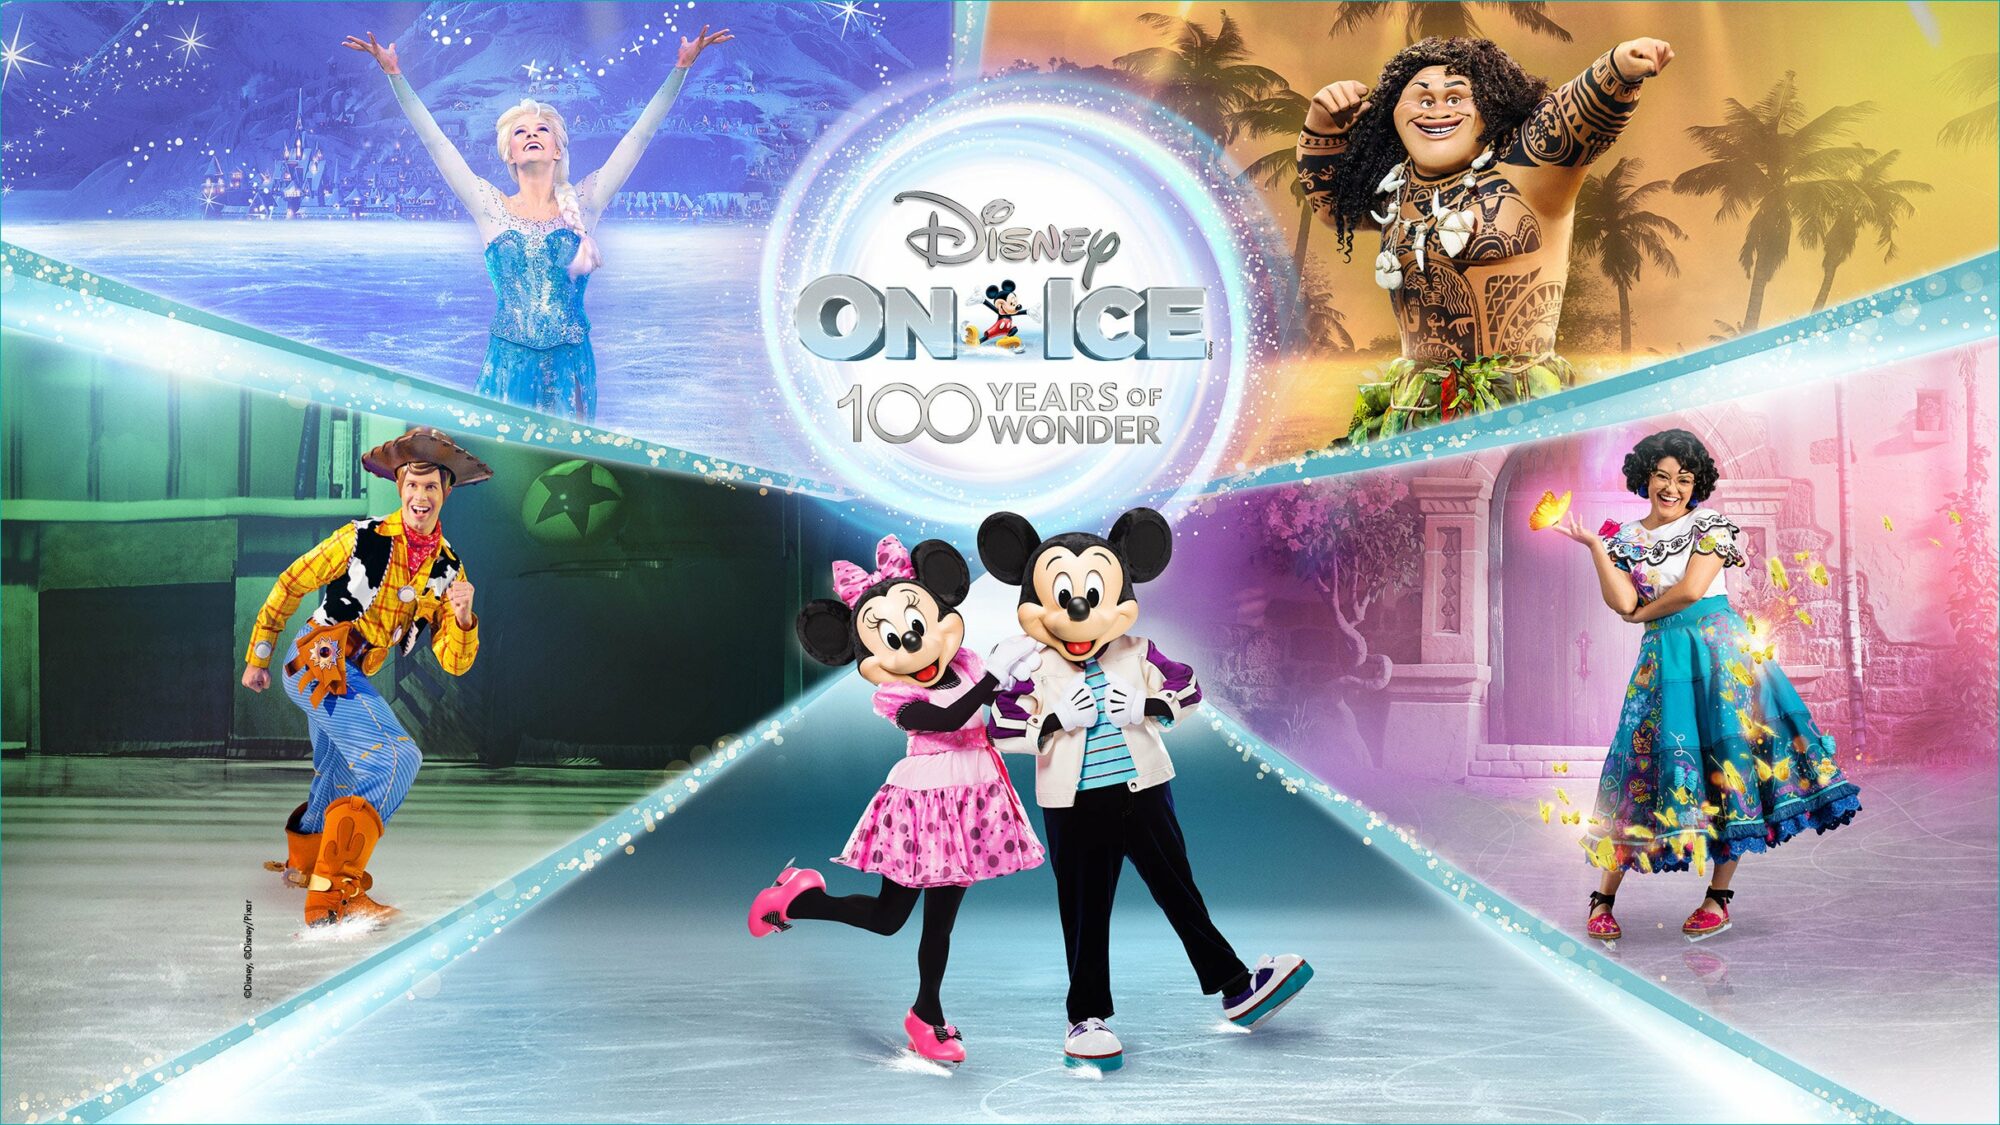 Disney on Ice Presents 100 Years of Wonder at Utilita Arena Sheffield, Sheffield